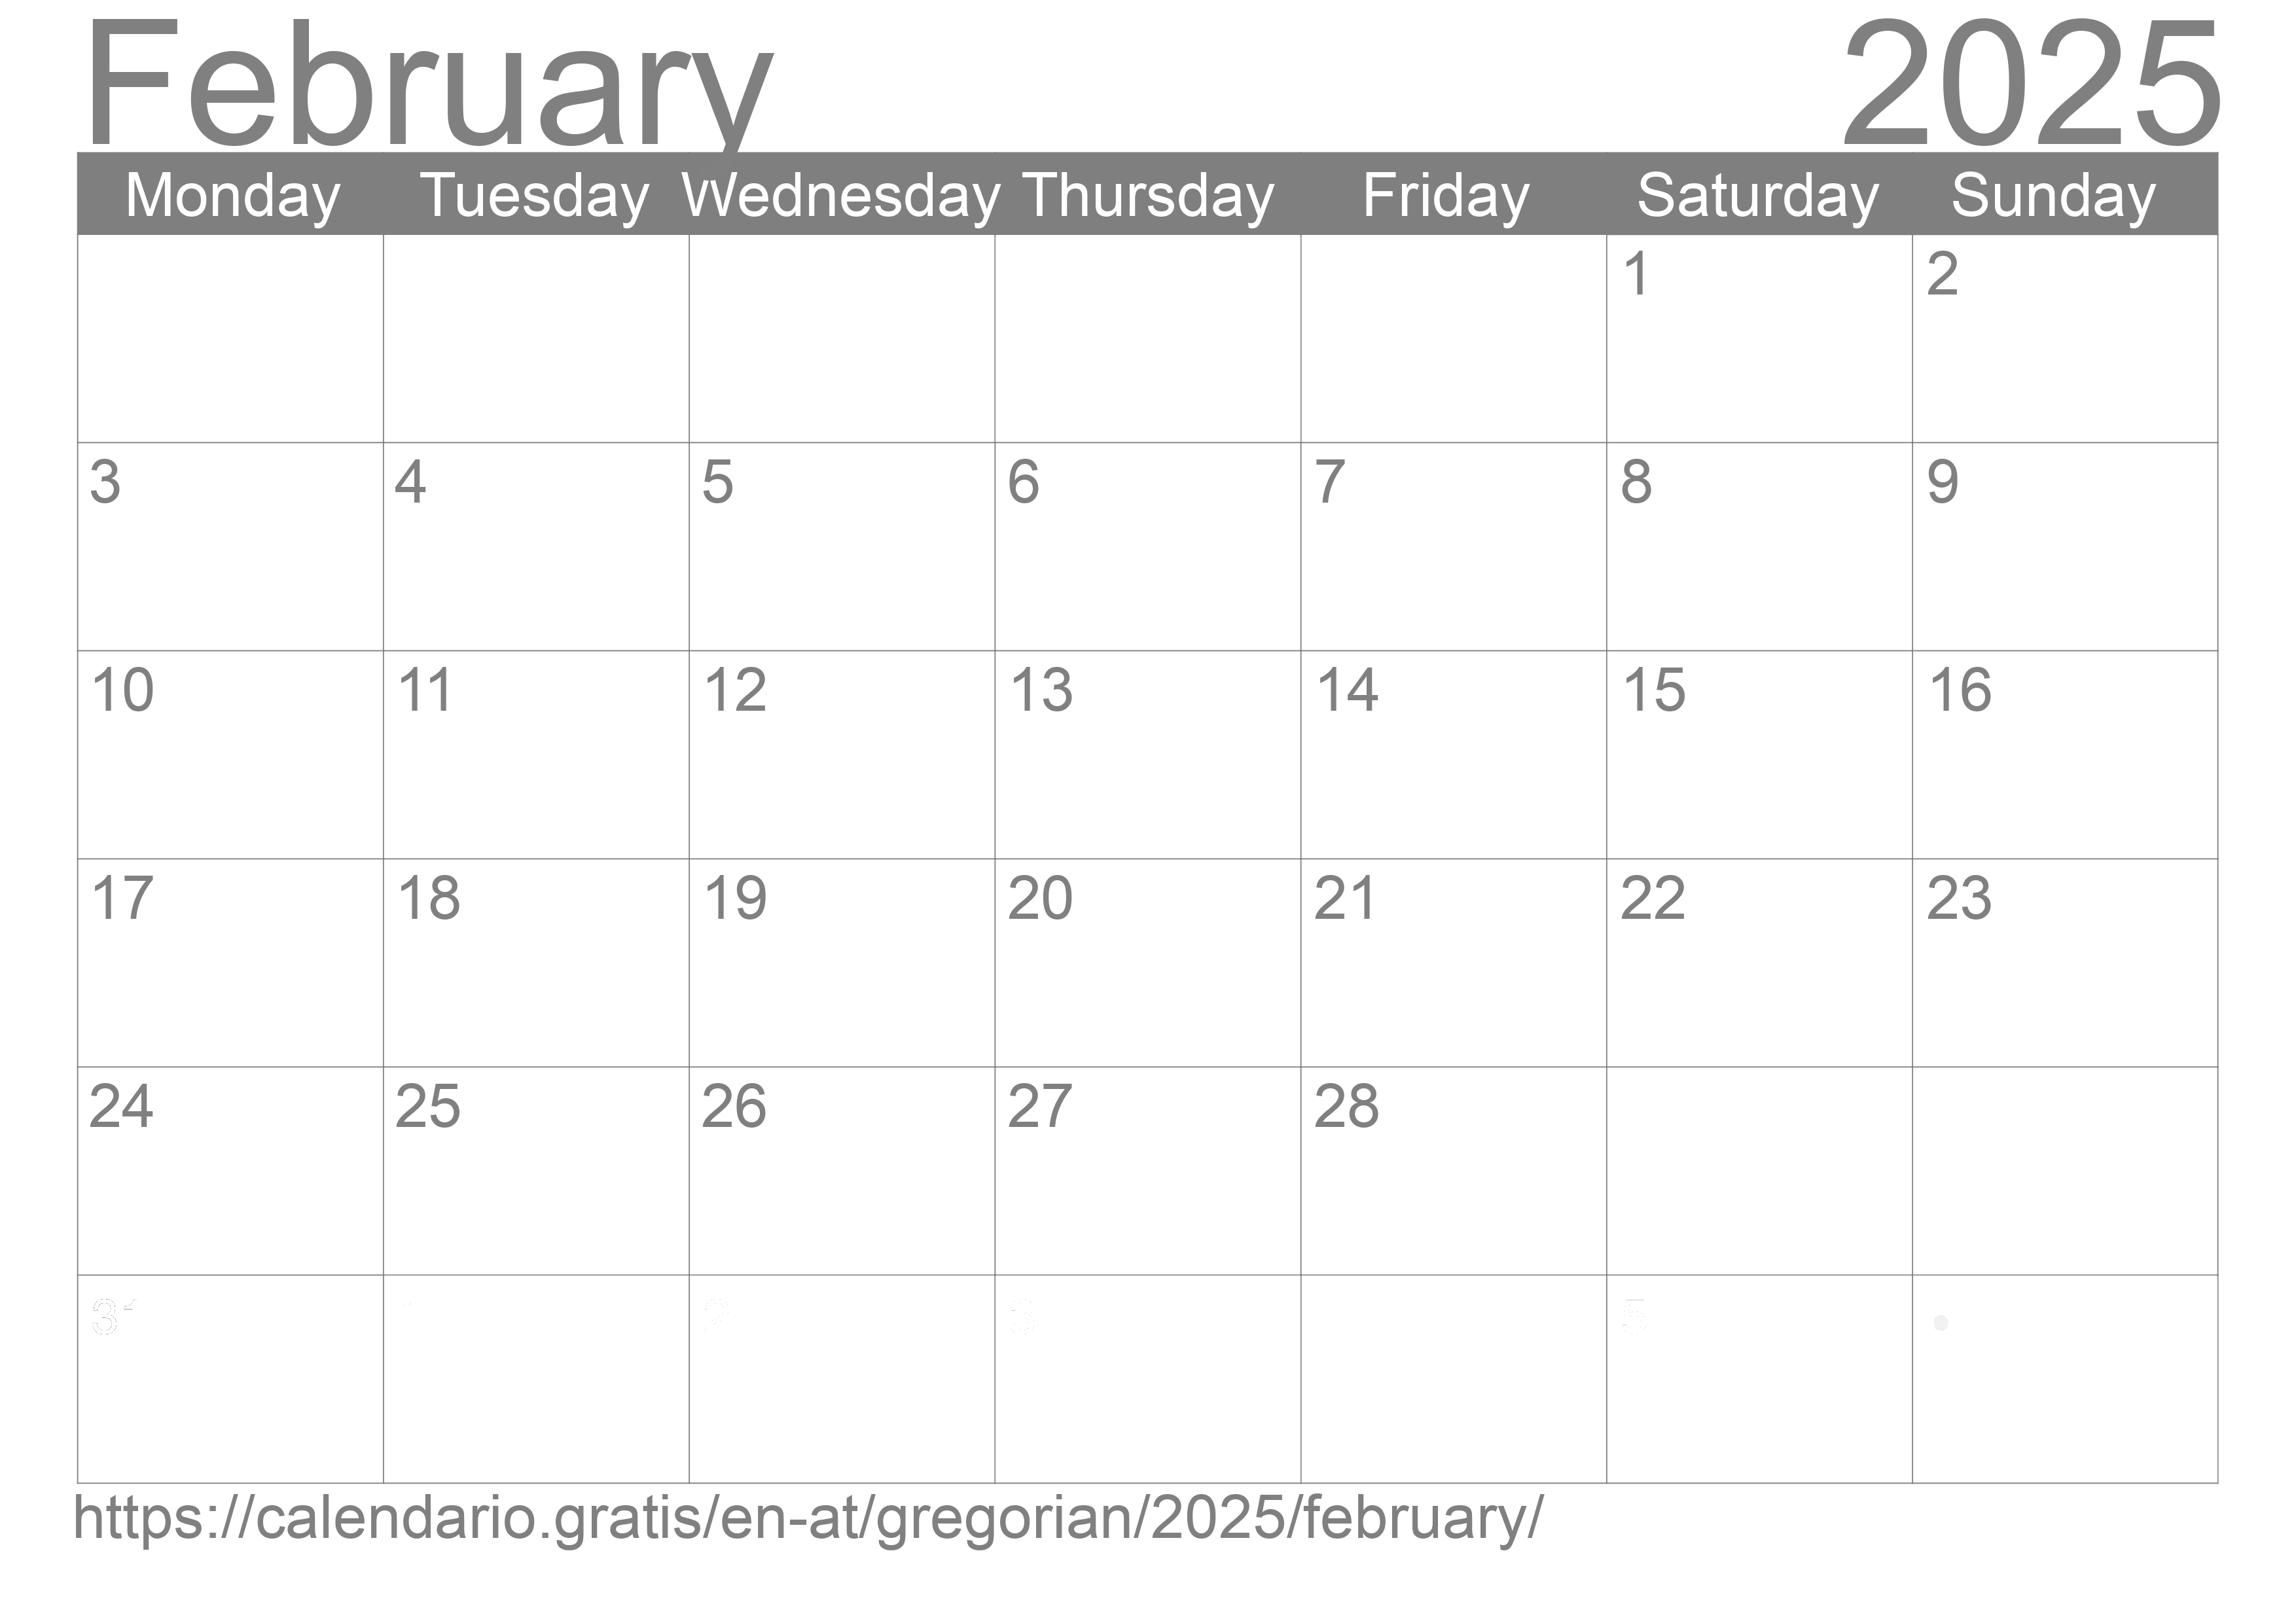 Calendar February 2025 to print